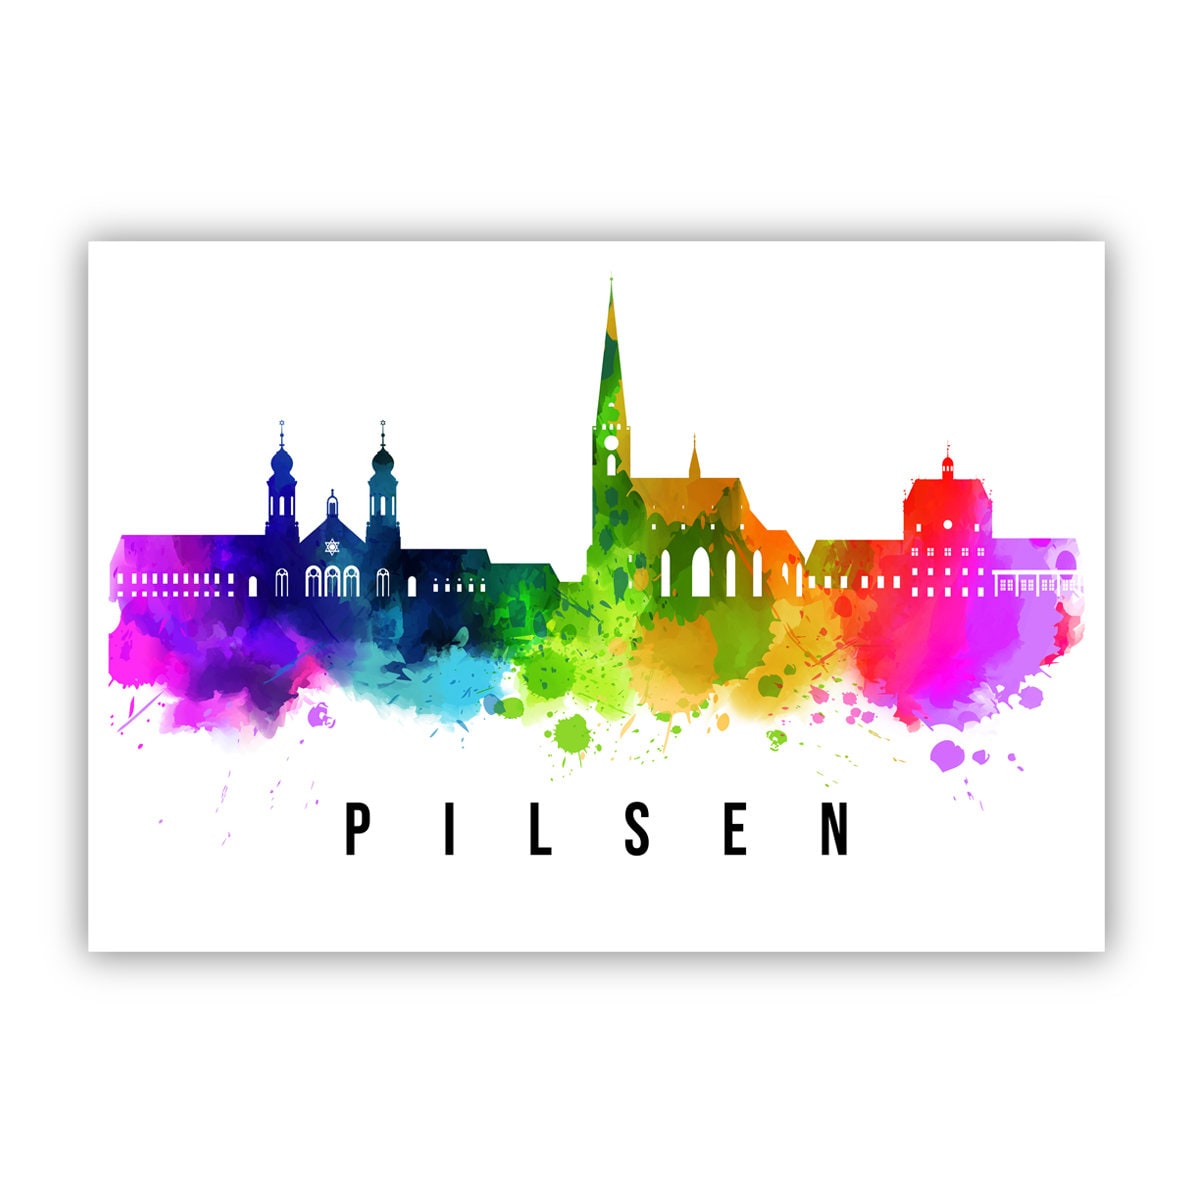 Pilsen Czech Republic Poster, Skyline poster cityscape poster, Landmark City Illustration poster, Home wall decoration, Office wall art